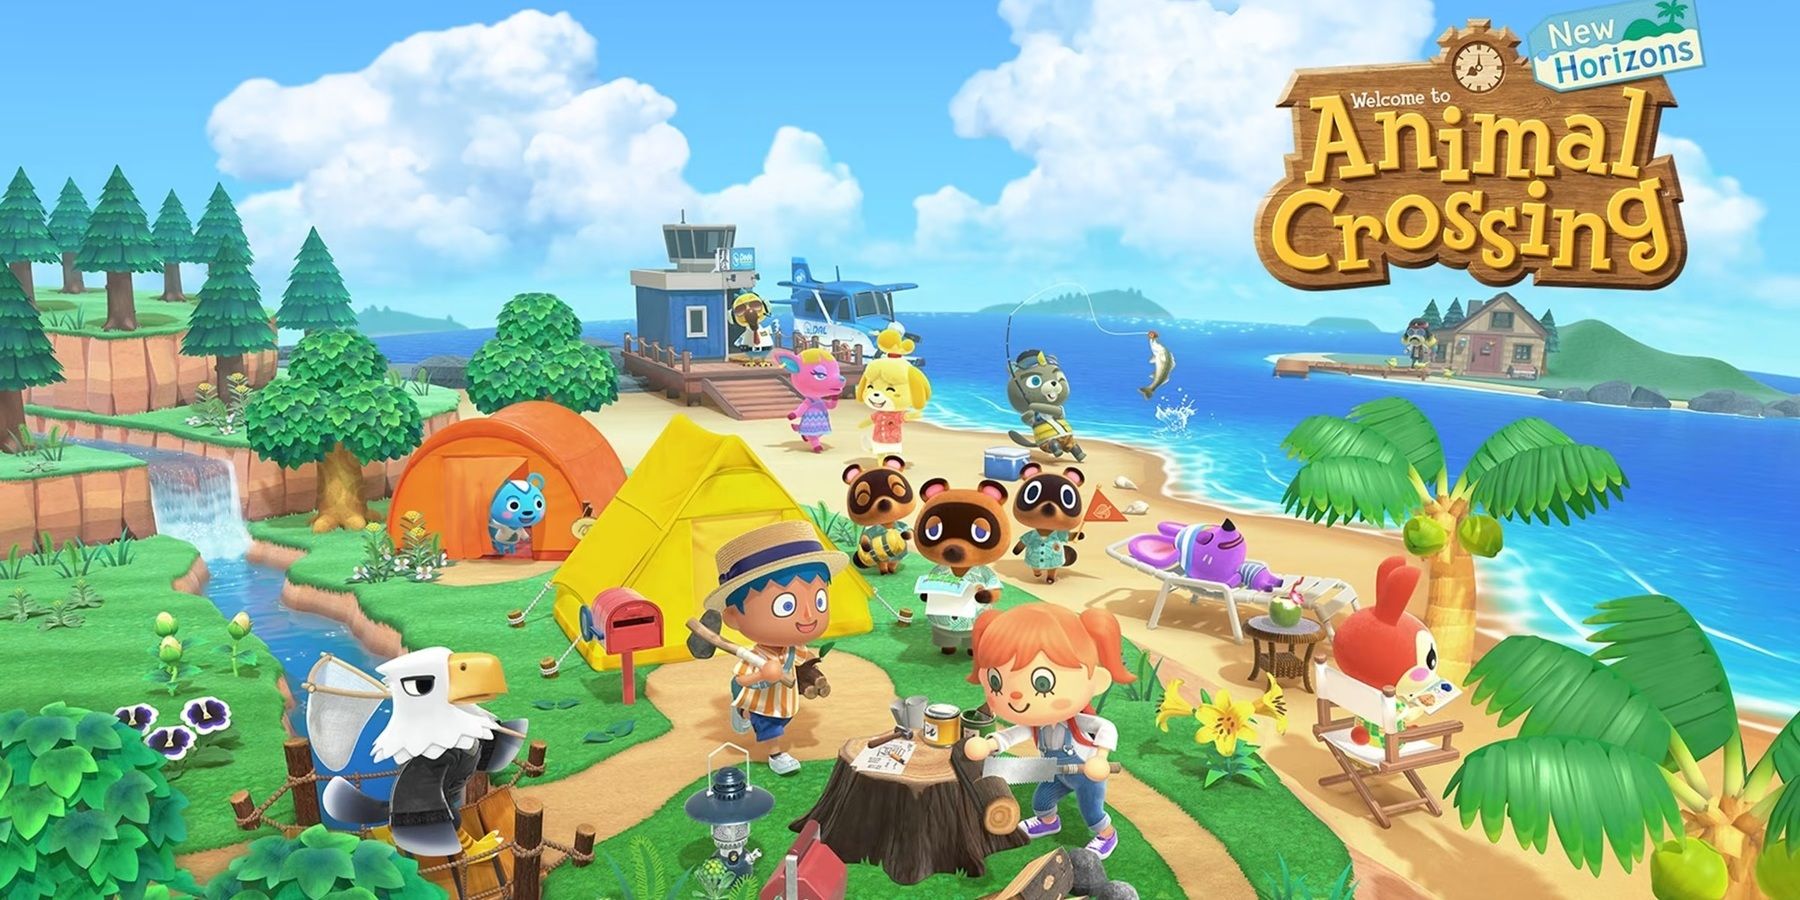 Animal Crossing New Horizons cover art